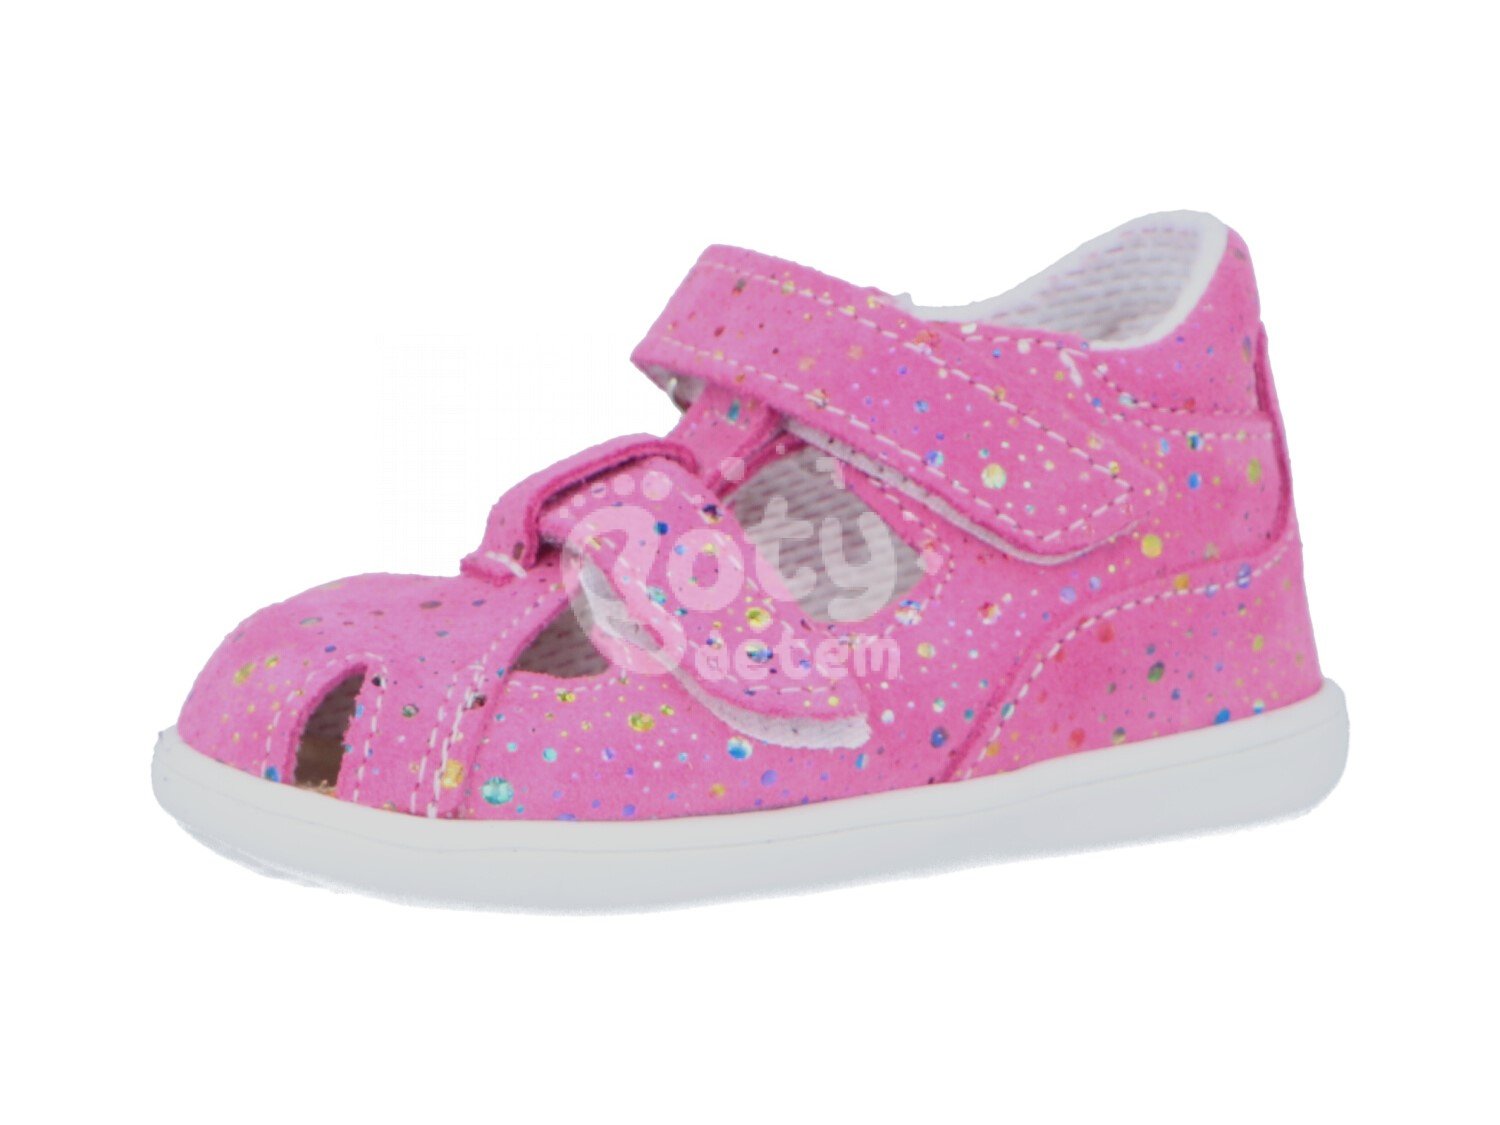 Jonap kožené sandálky 041 S růžová bublina